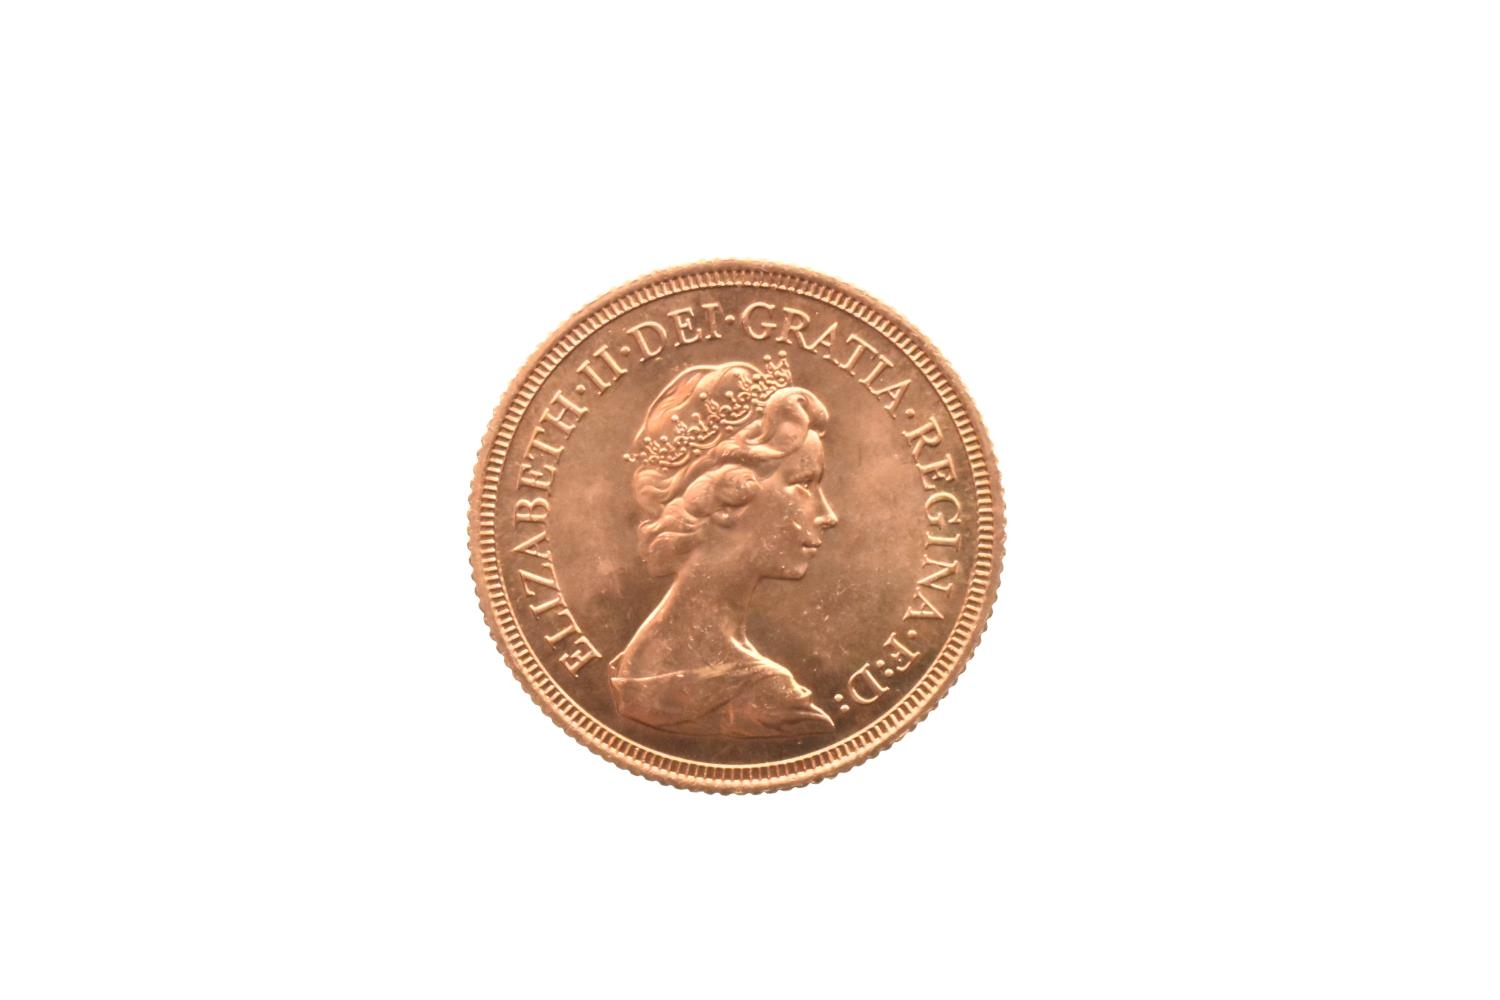 United Kingdom - Elizabeth II (1952-2022), Gold Sovereign, dated 1979, - Image 2 of 2